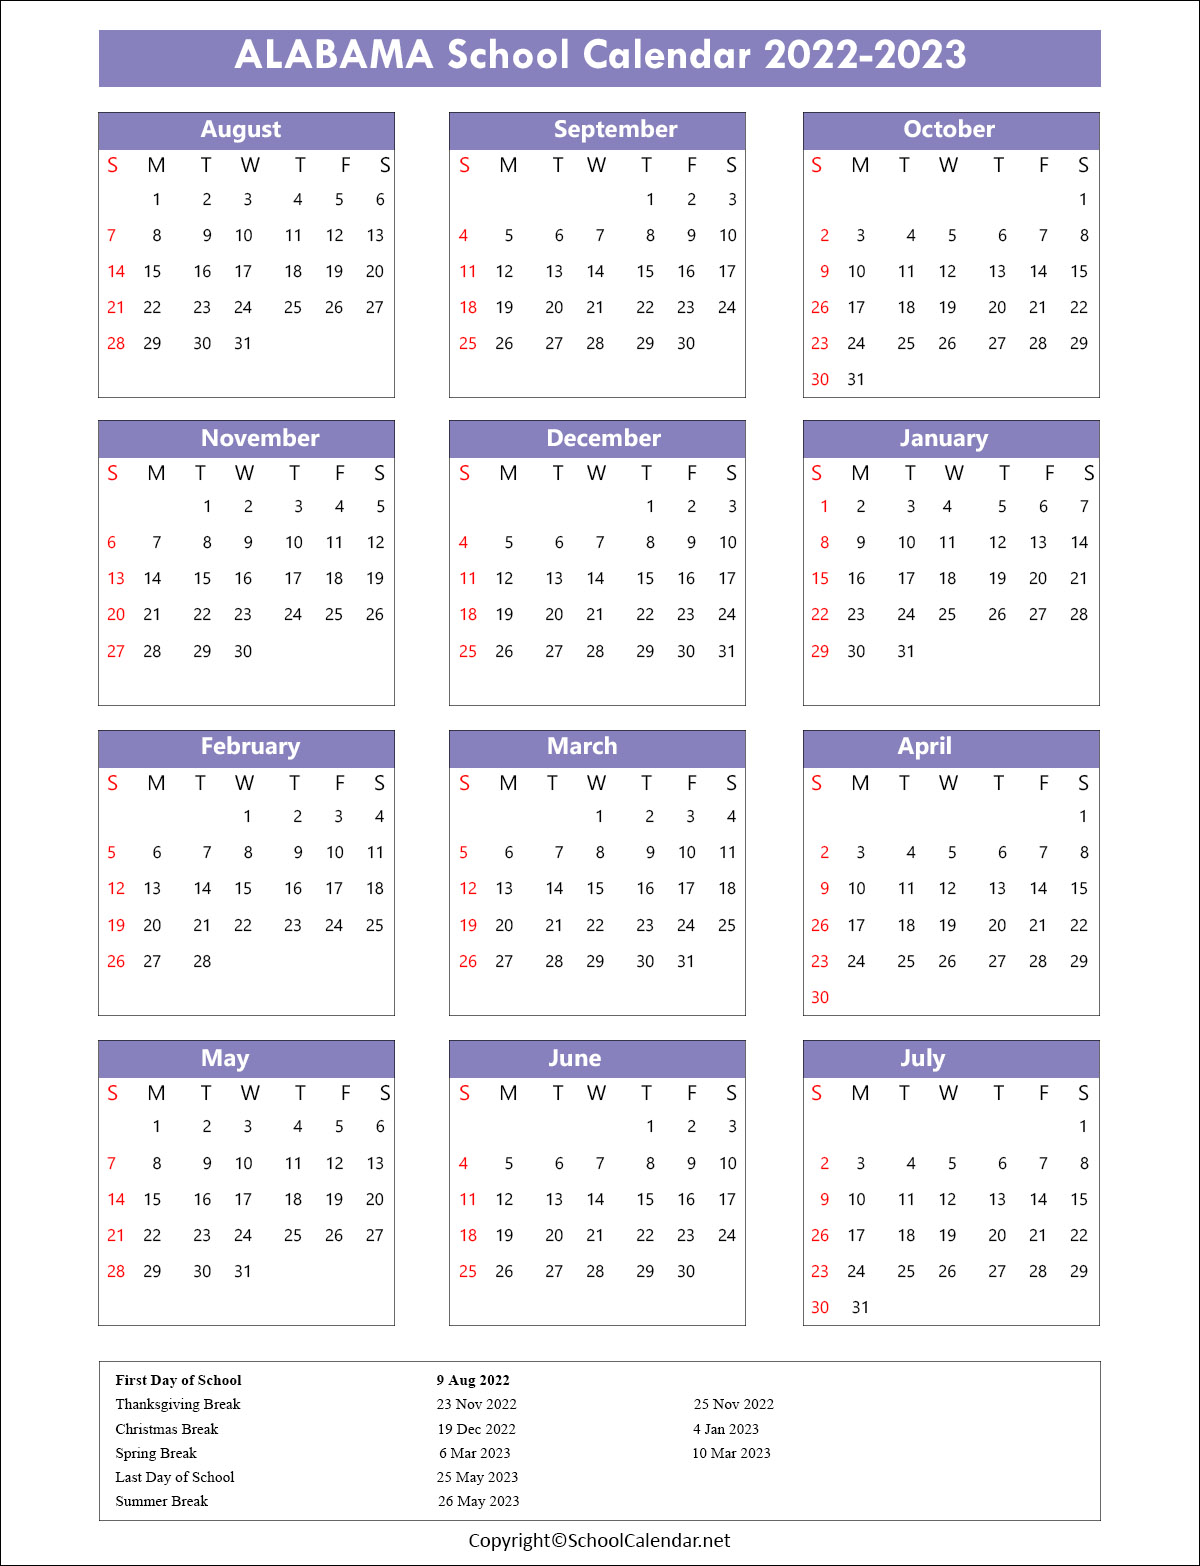 Alabama School Calendar 2022